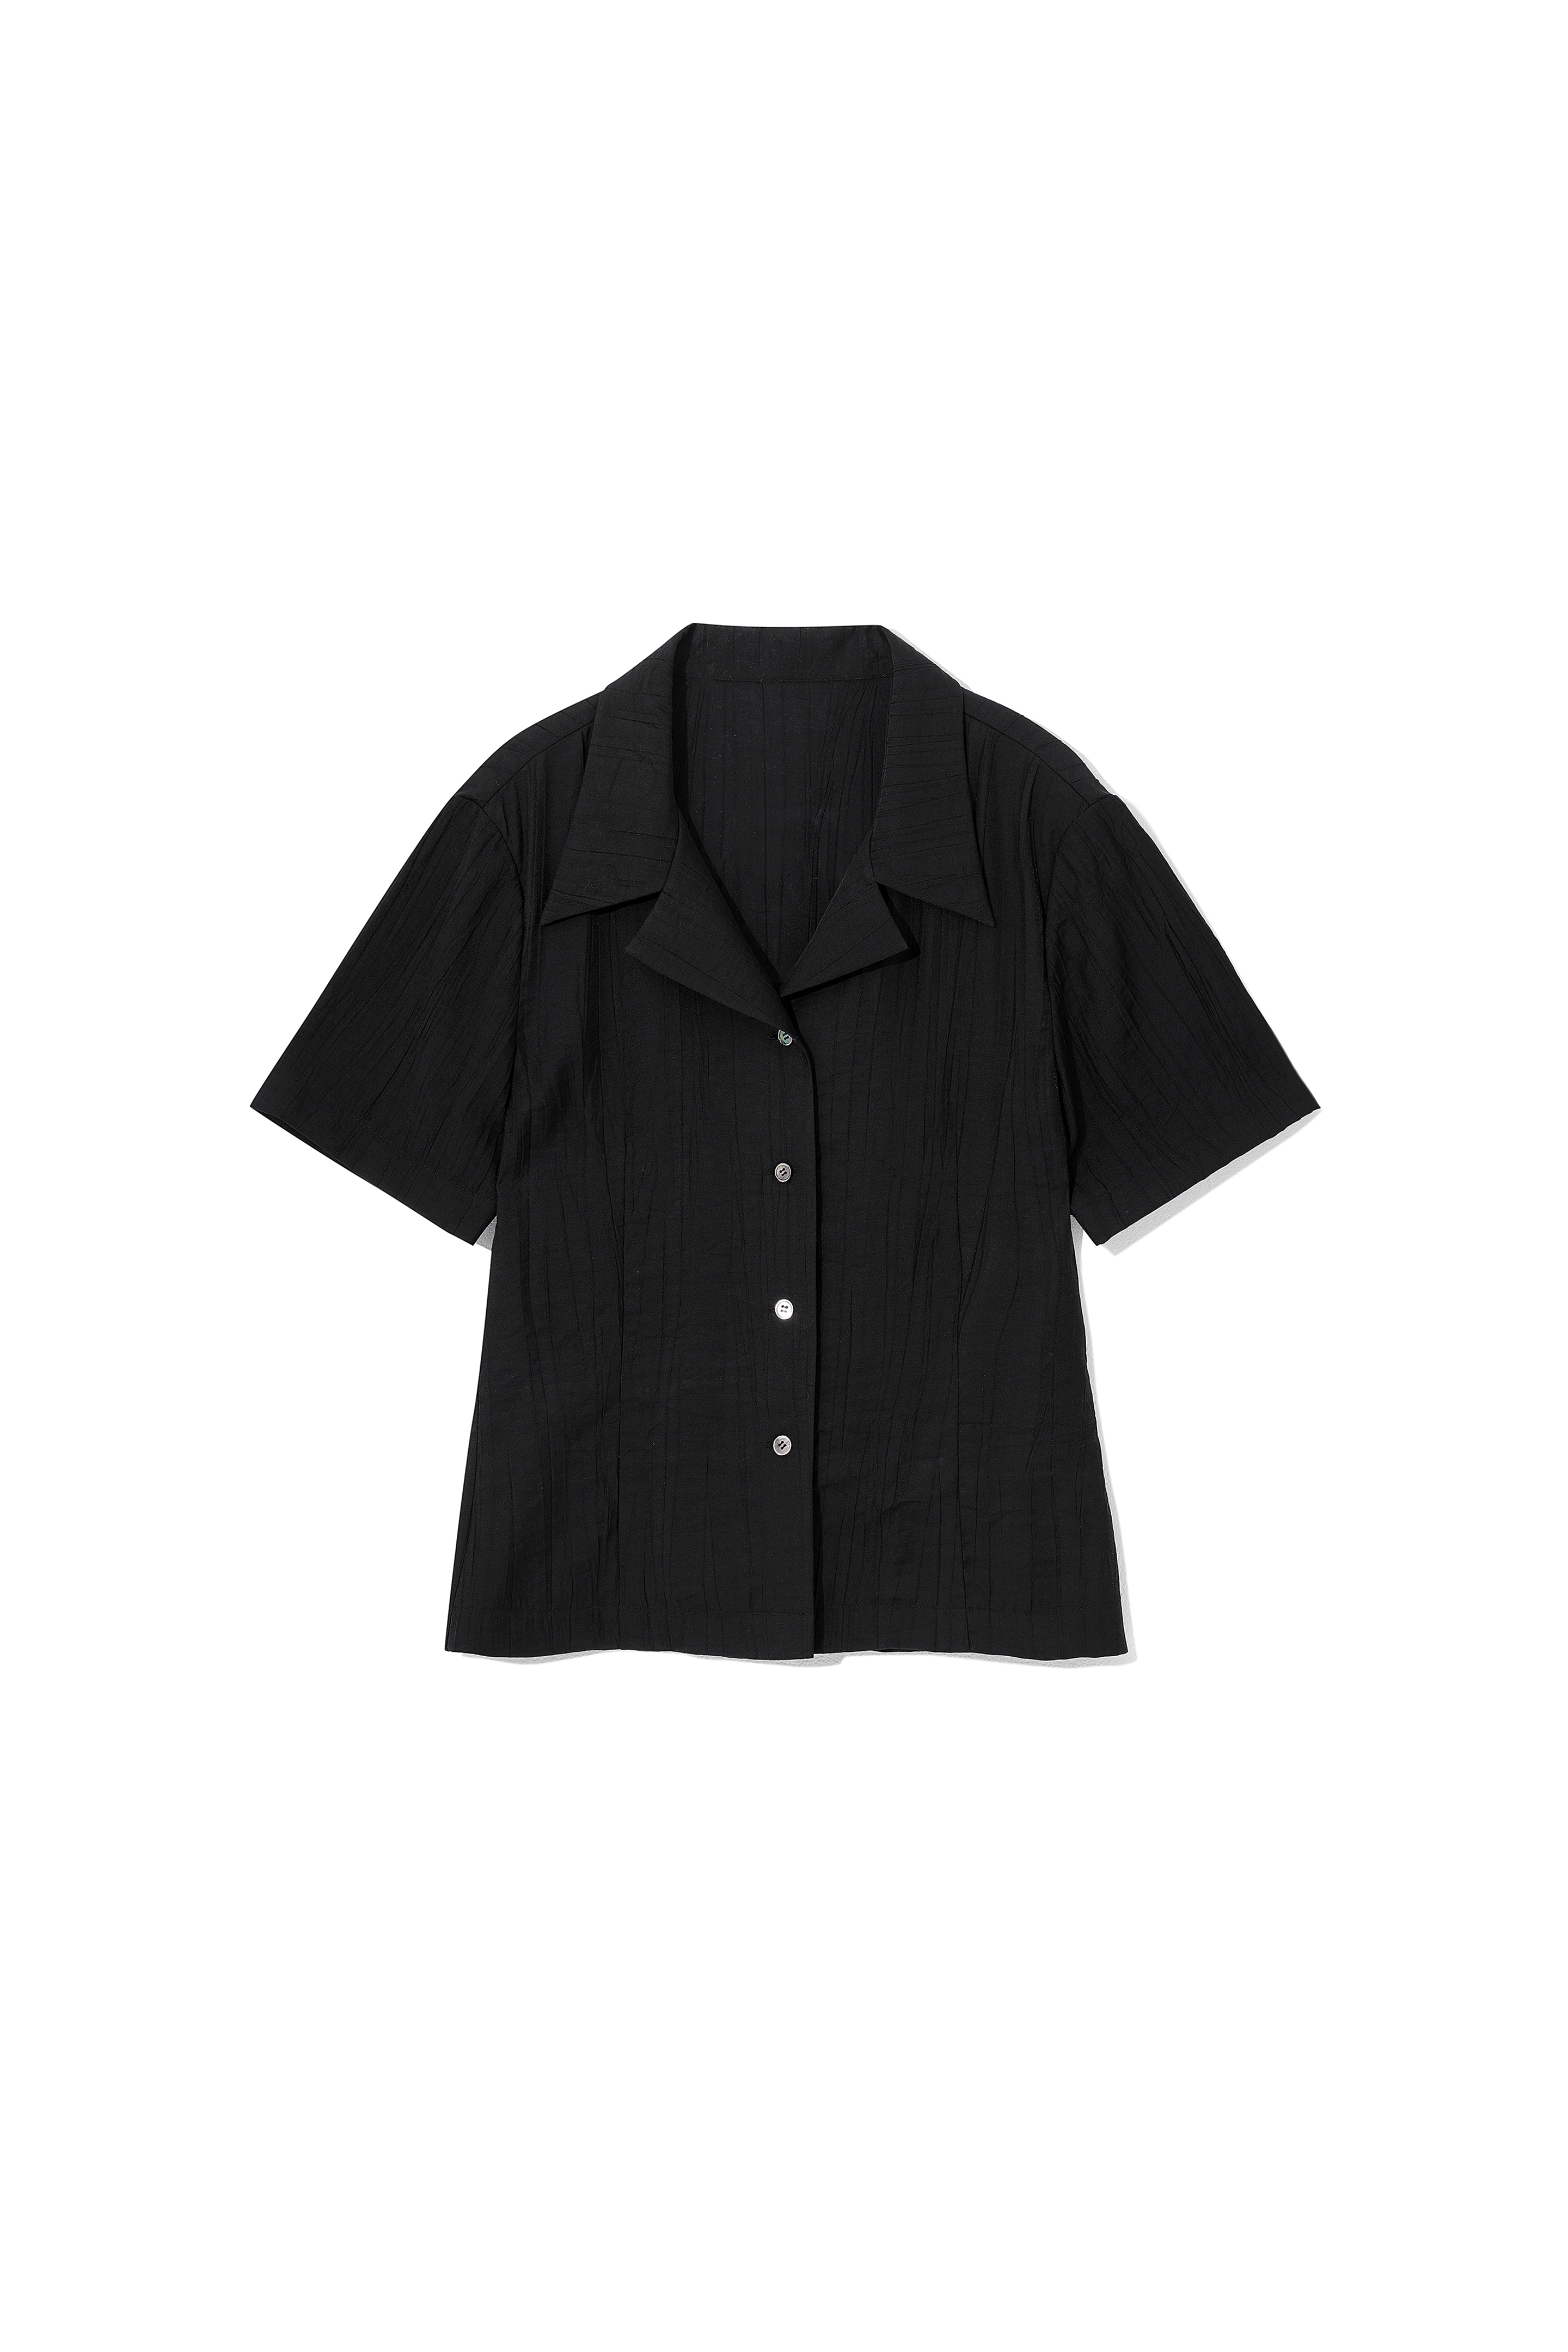 Delphy Pleats Shirts Black [06.07(WED) 20:00]